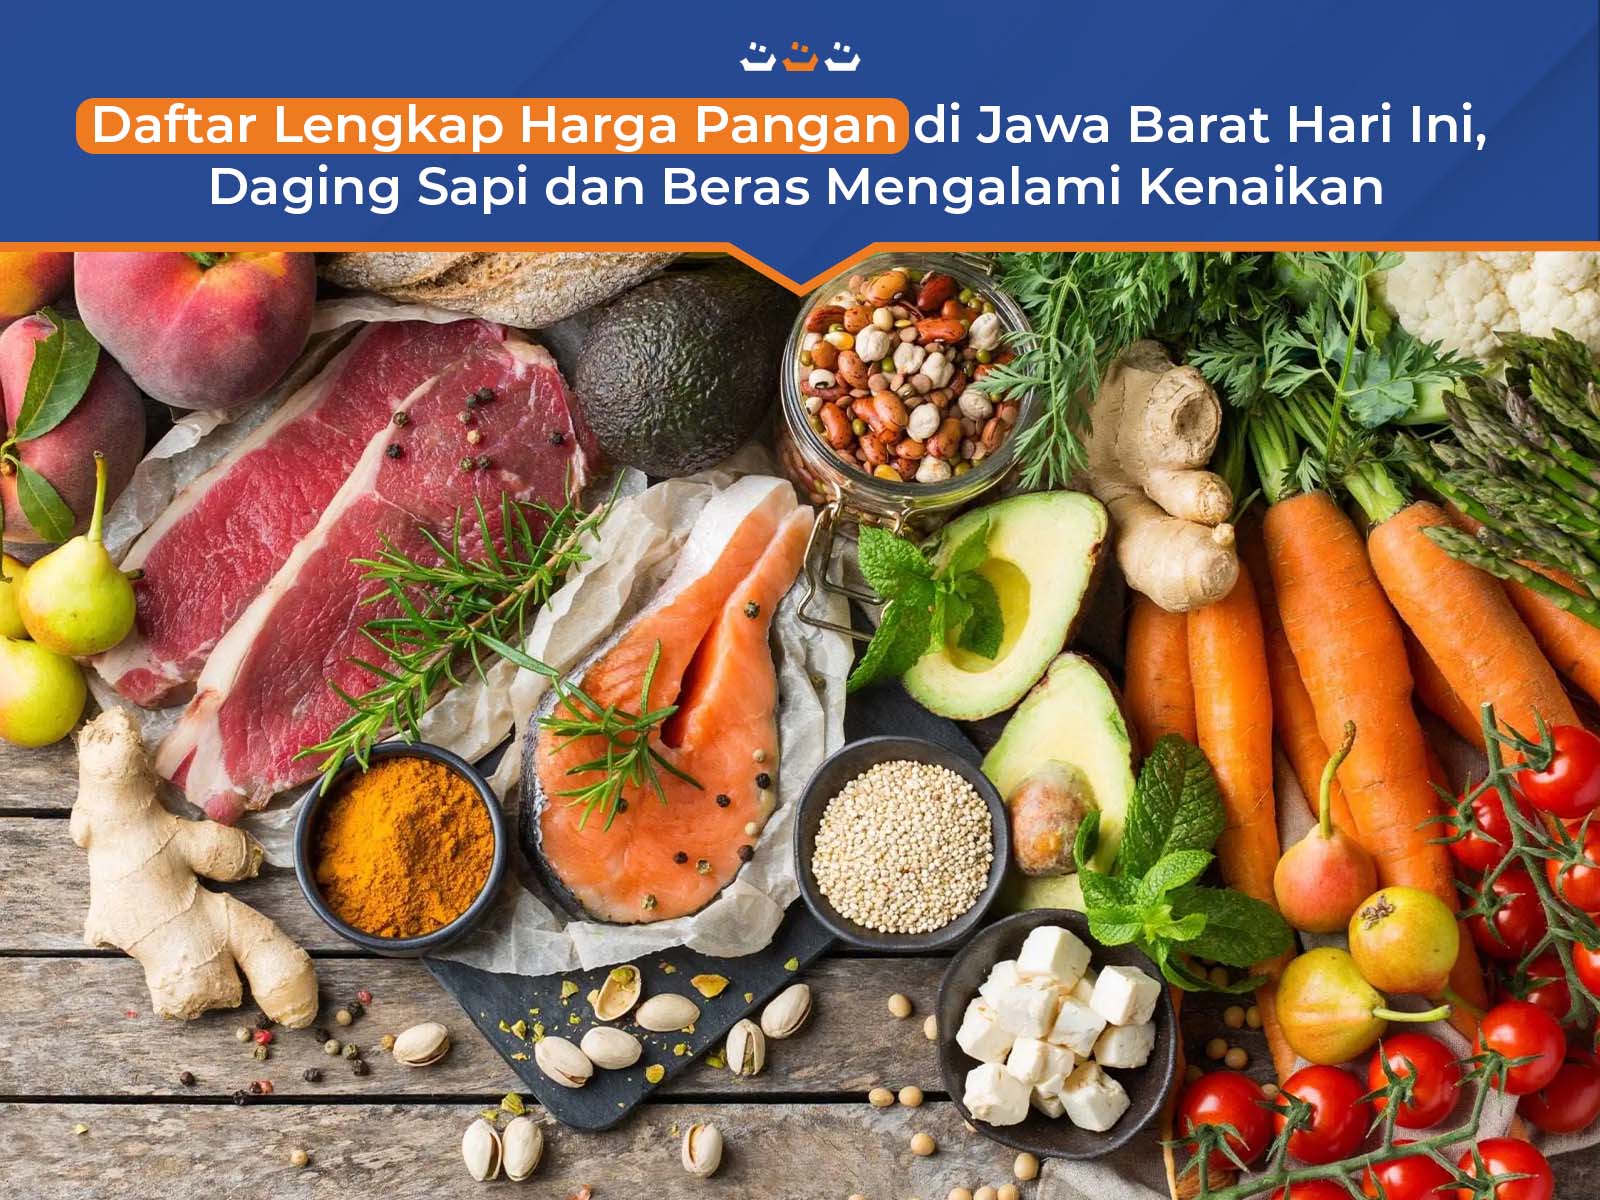 Daftar Lengkap Harga Pangan di Jawa Barat Hari Ini, Daging Sapi dan Beras Mengalami Kenaikan